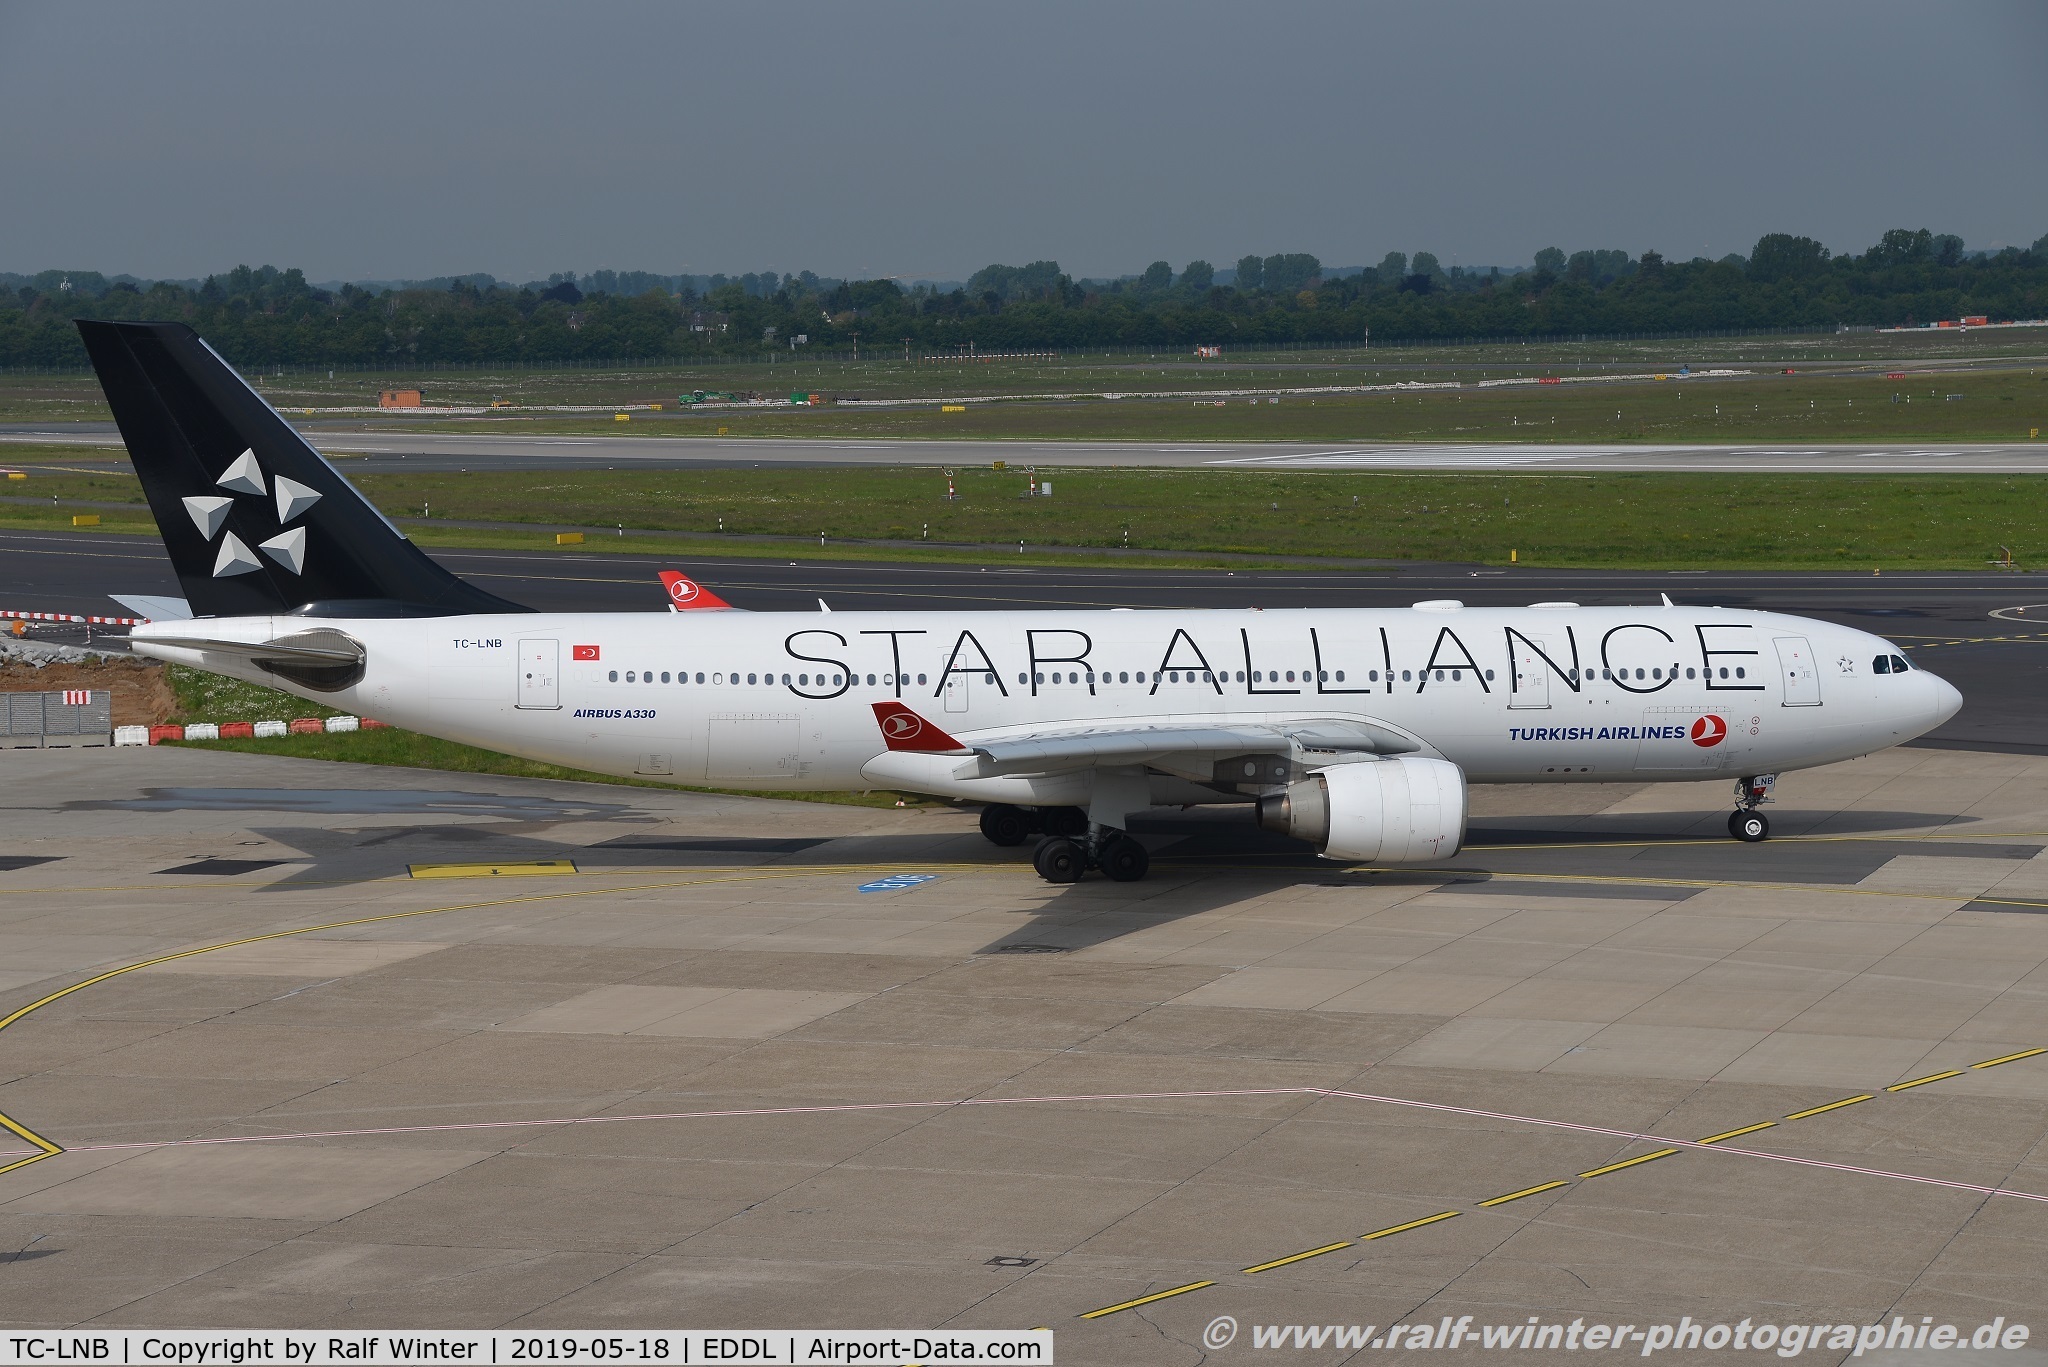 TC-LNB, 2008 Airbus A330-223 C/N 939, Airbus A330-223 - TK THY THY Turkish Airlines 'Star Alliance' - 939 - TC-LNB - 18.05.2019 - DUS